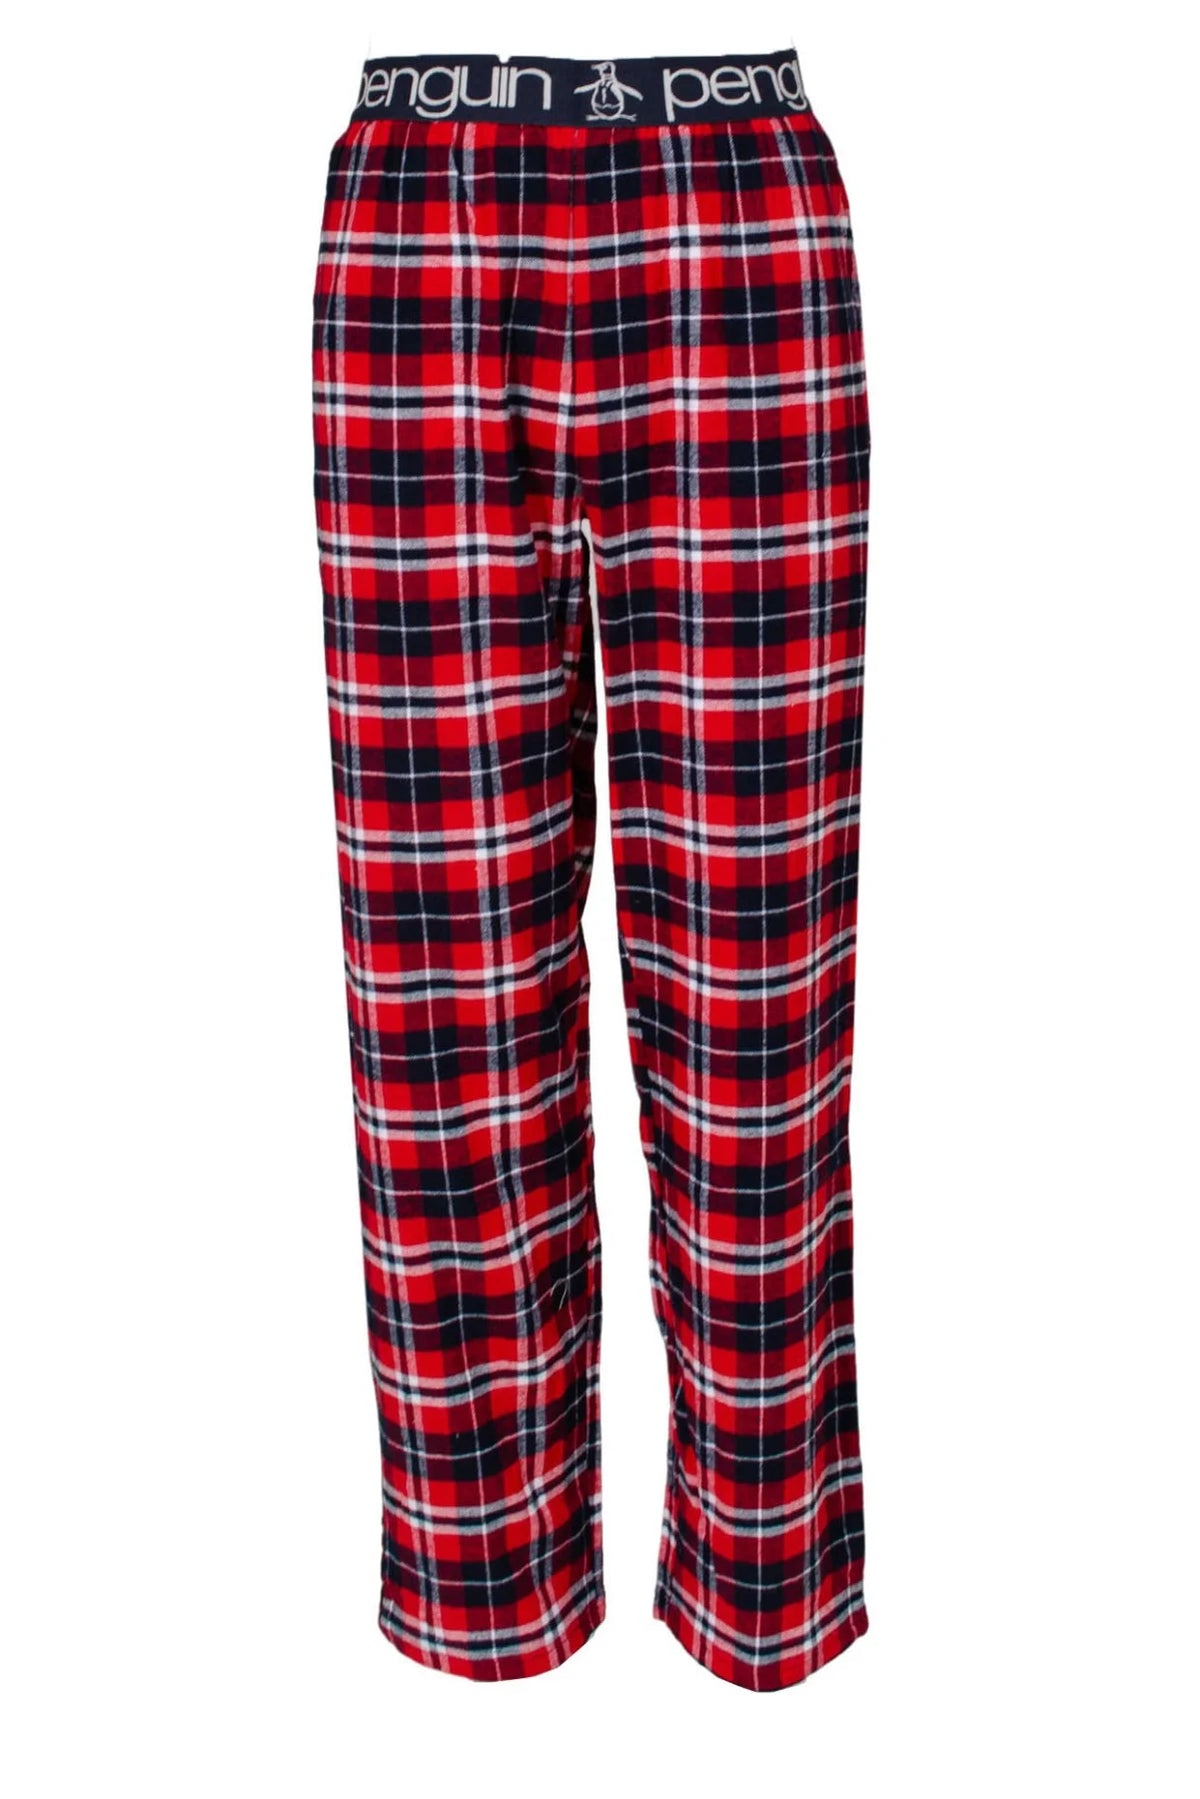 Penguin Cotton Check Pyjama Lounge Pants Red/Navy / 3XL